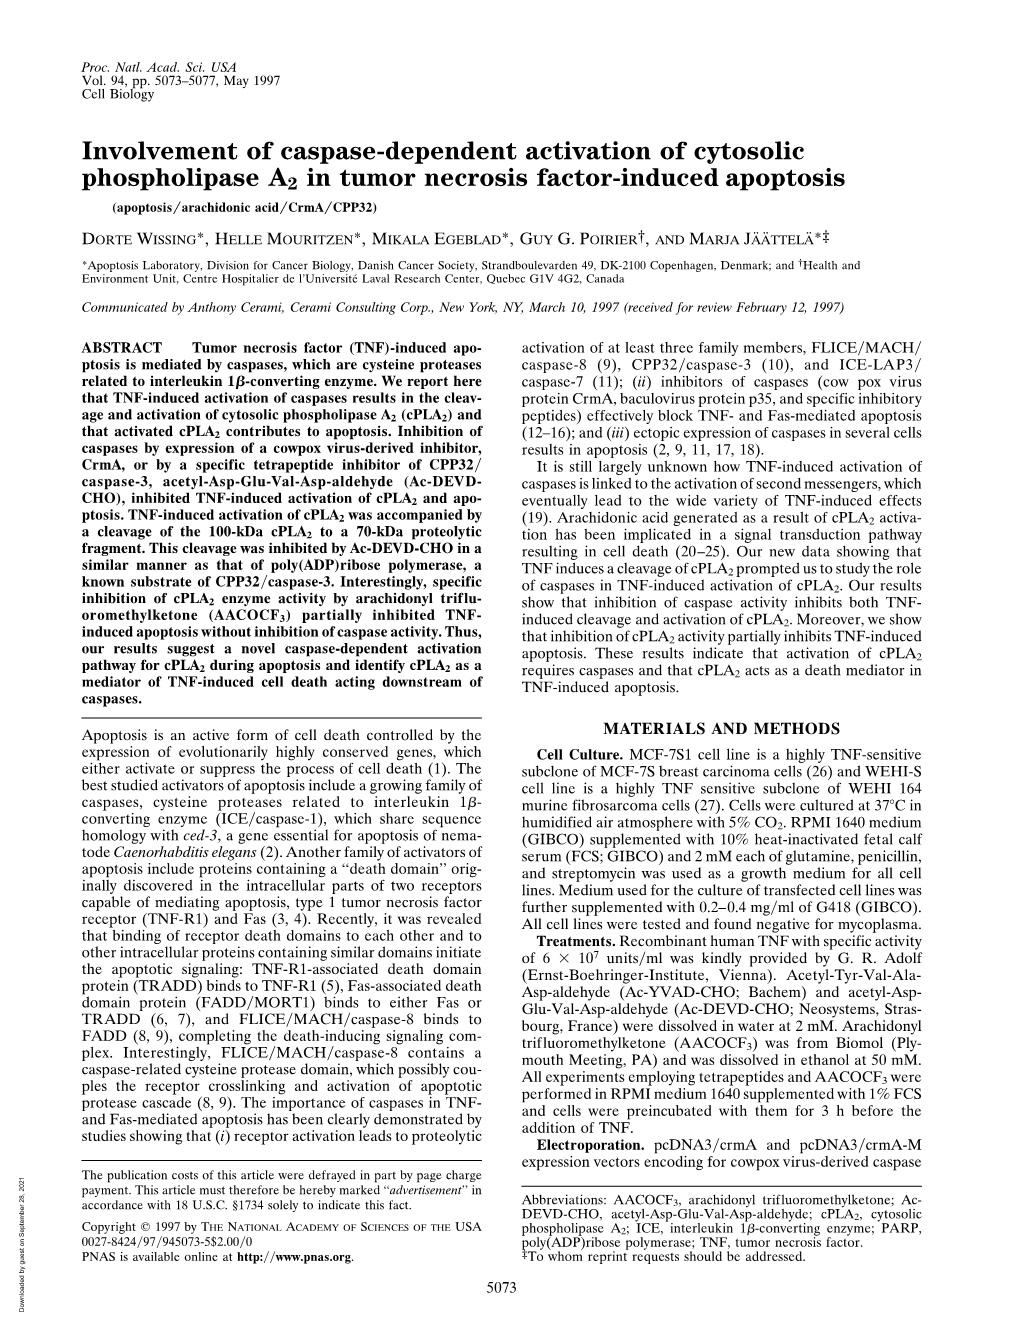 Involvement of Caspase-Dependent Activation of Cytosolic Phospholipase A2 in Tumor Necrosis Factor-Induced Apoptosis (Apoptosis͞arachidonic Acid͞crma͞cpp32)